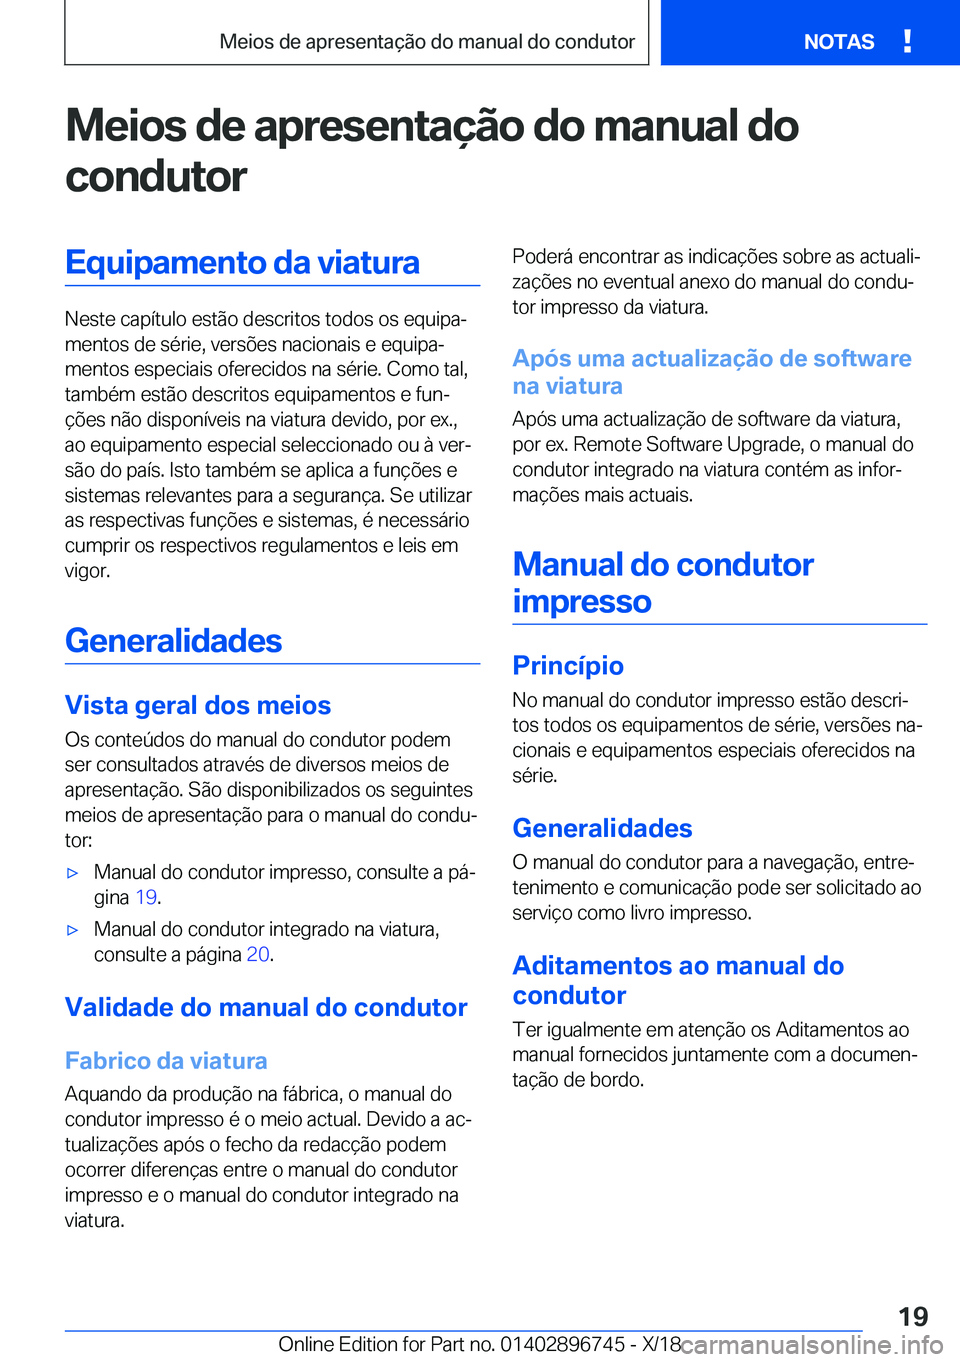 BMW X5 2019  Manual do condutor (in Portuguese) �M�e�i�o�s��d�e��a�p�r�e�s�e�n�t�a�